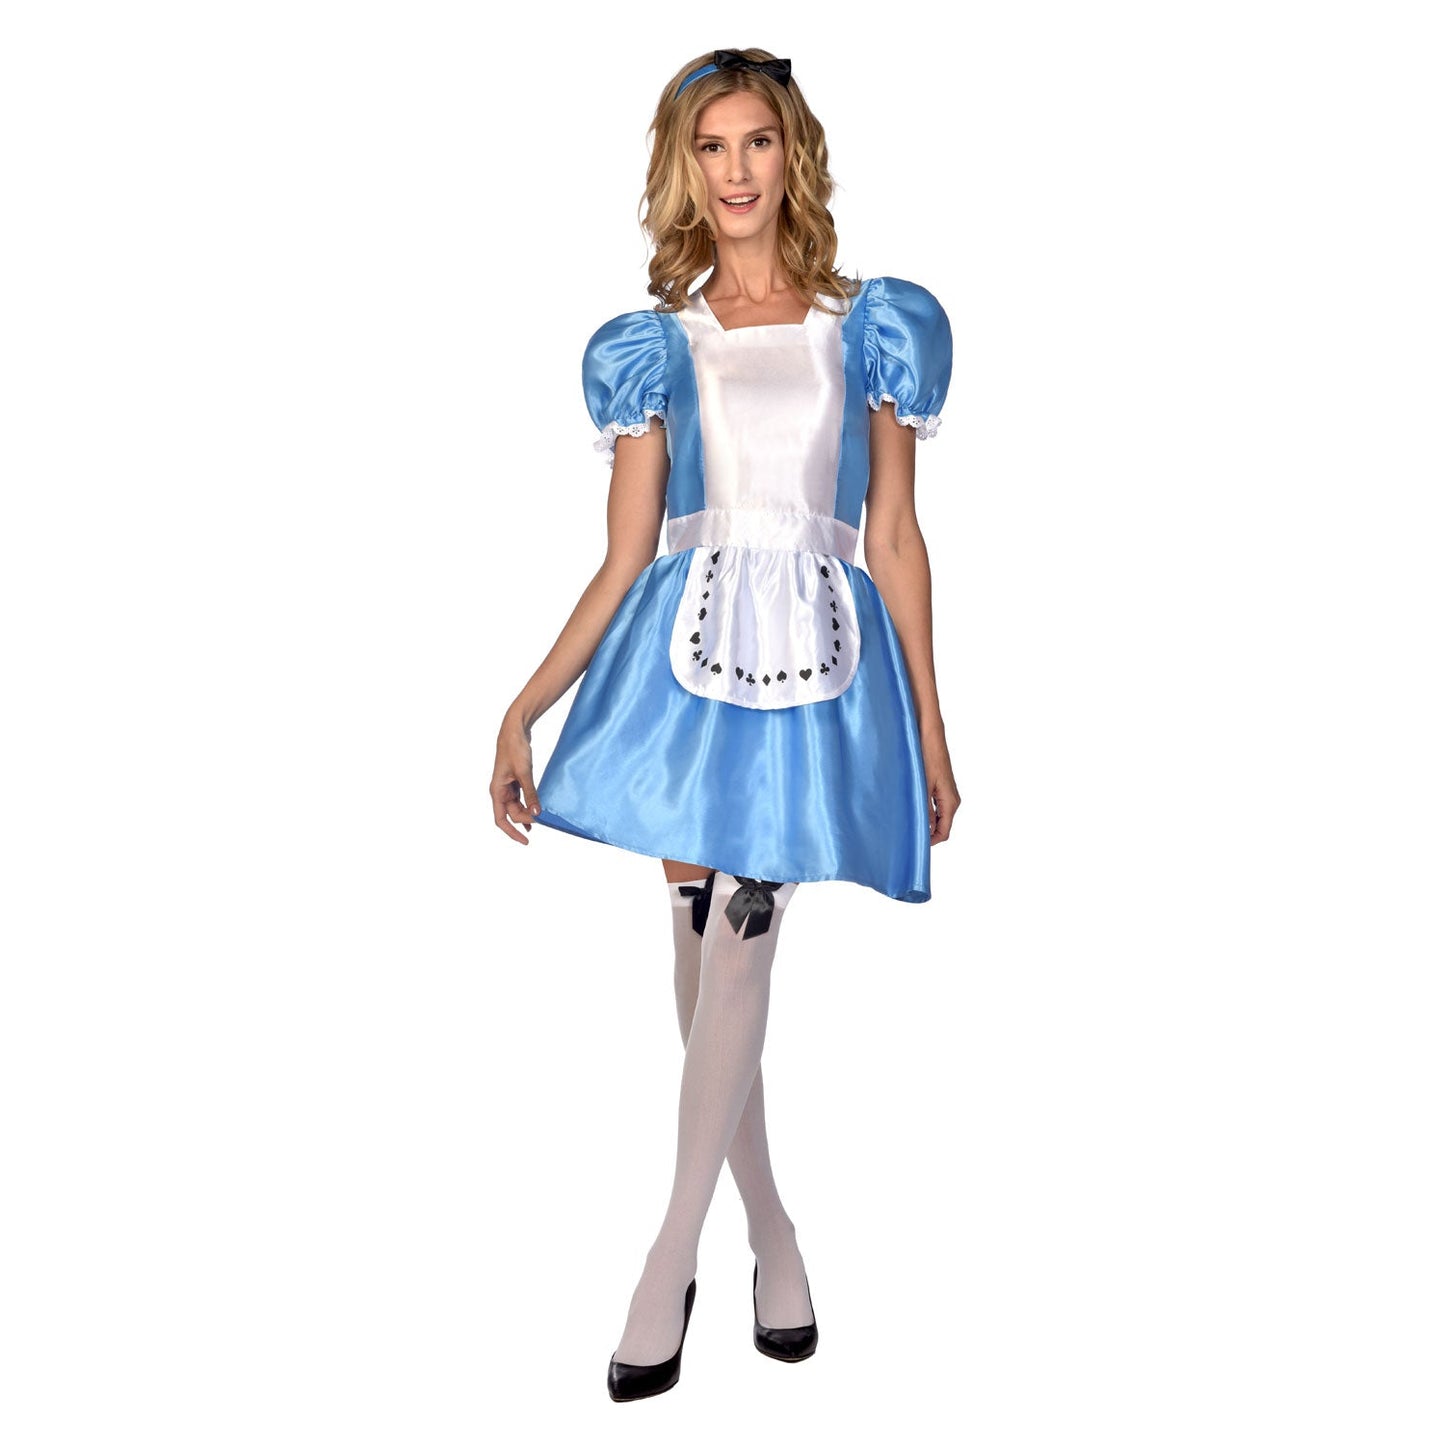 Ladies Alice in Wonderland Costume includes dress and headband